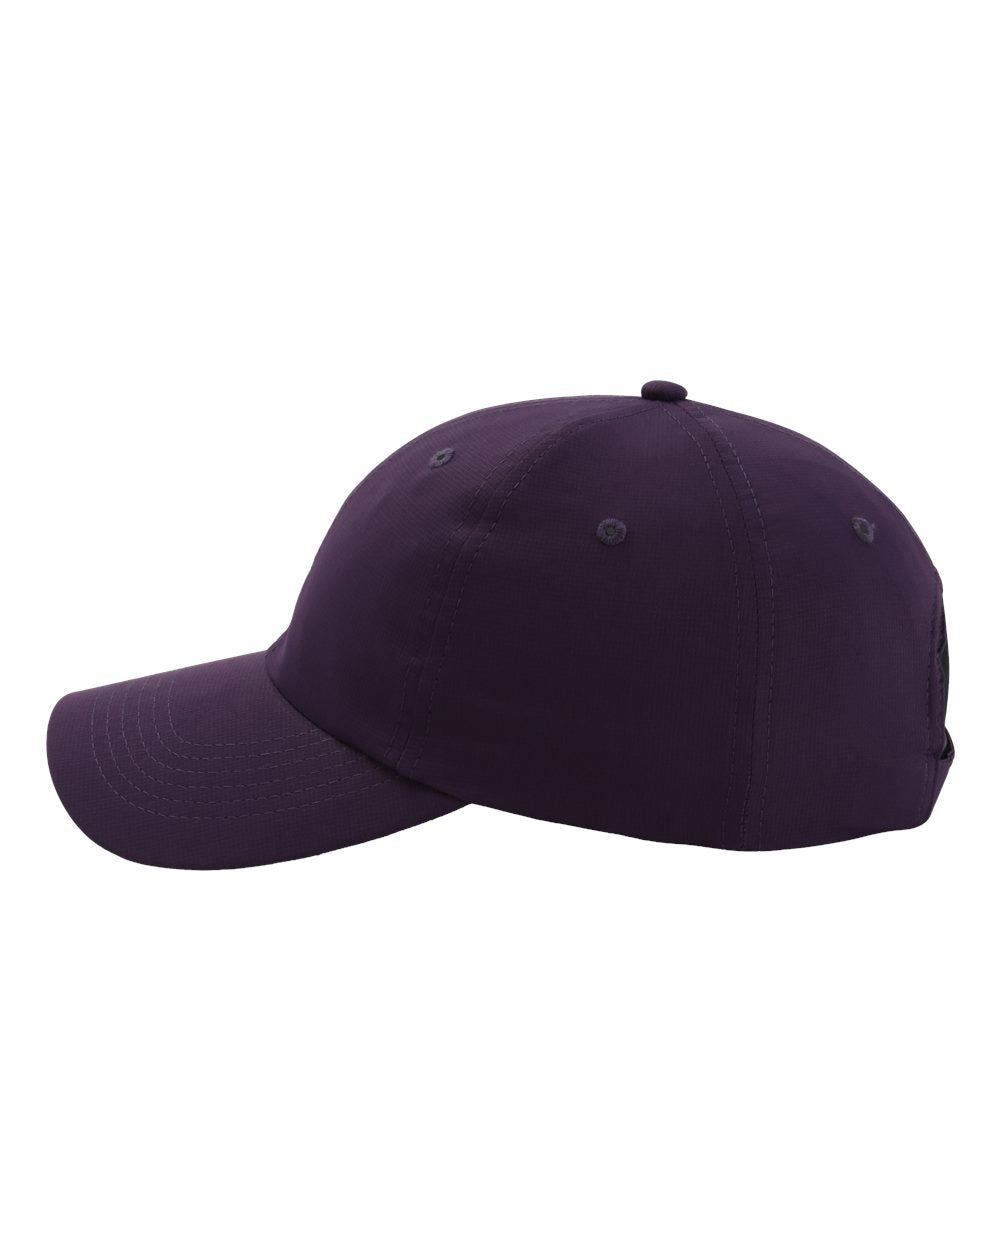 Side view of Imperial X210P custom hat in purple